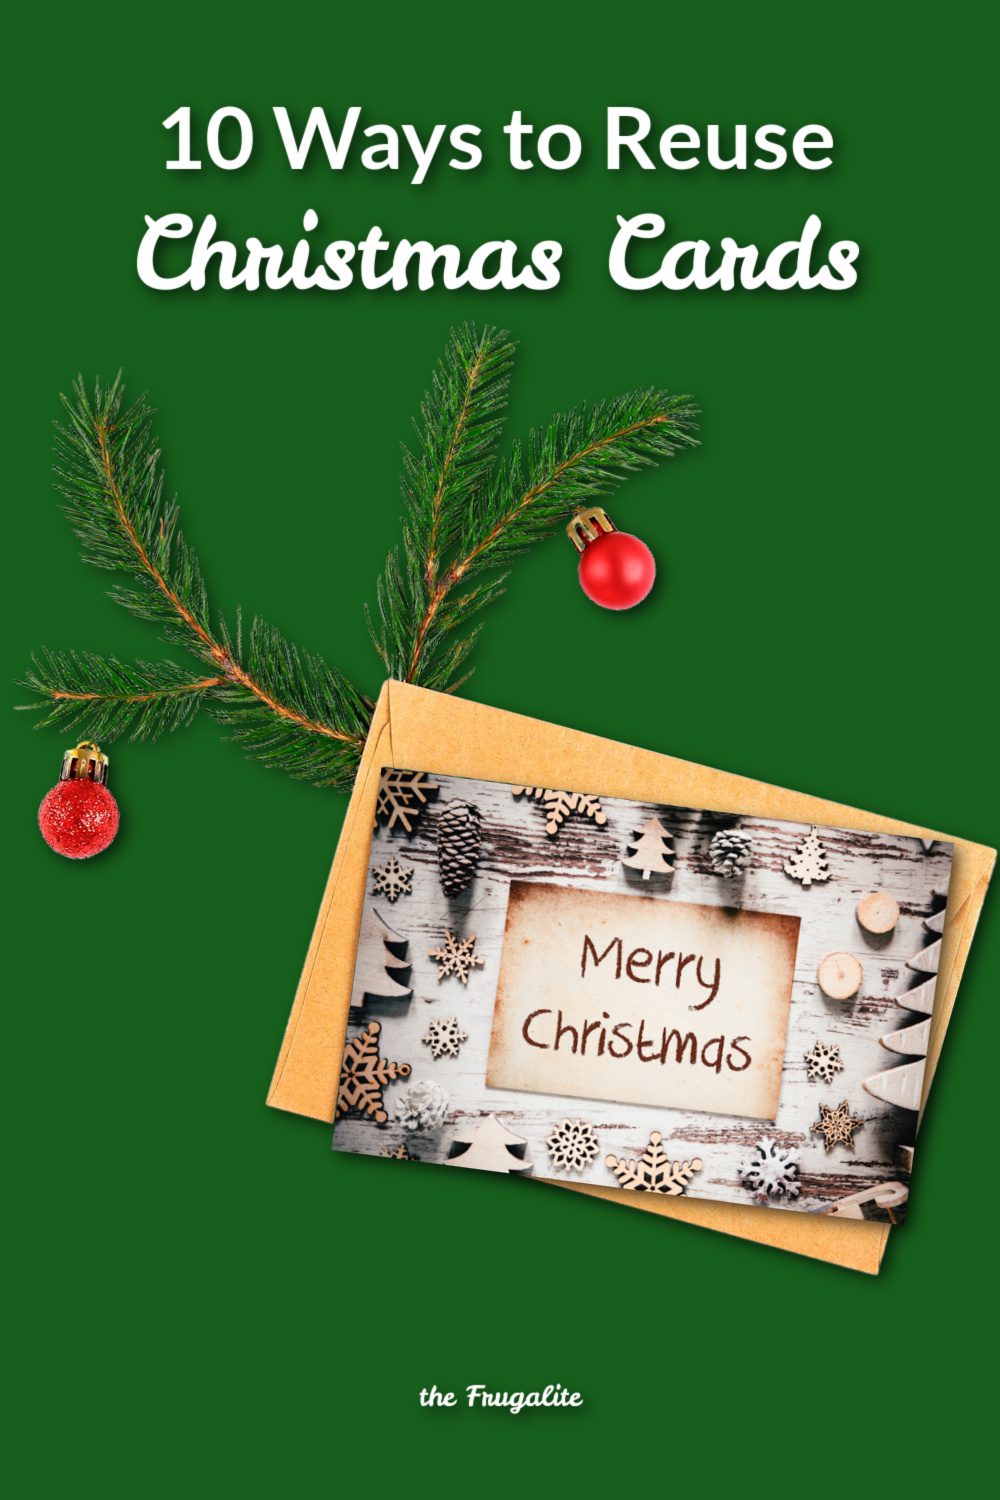 10 Ways to Reuse Christmas Cards